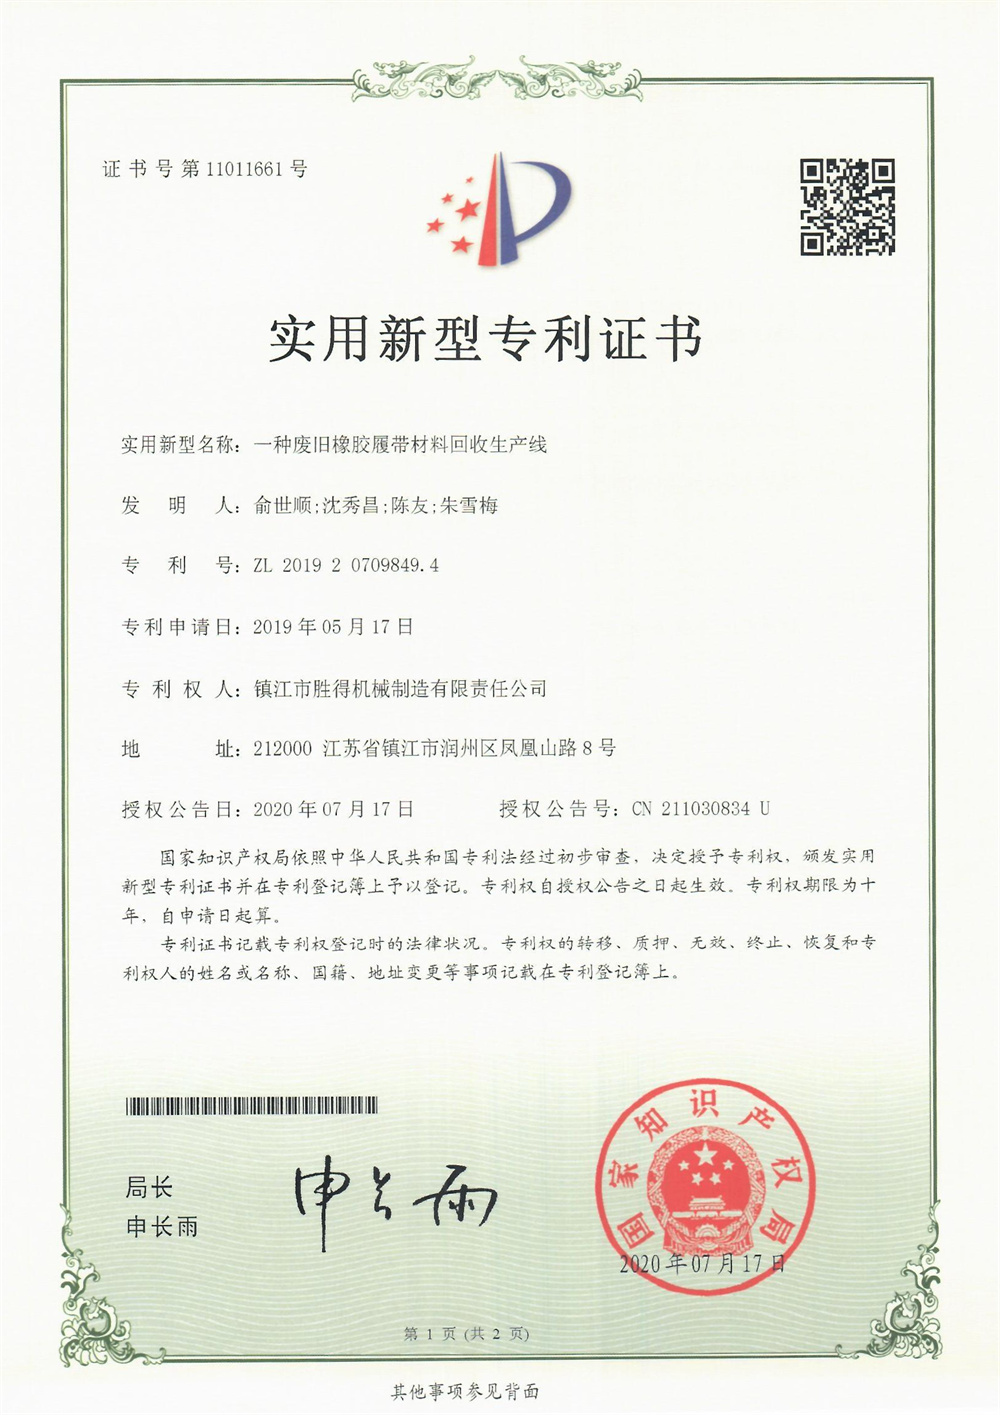 certification (8)